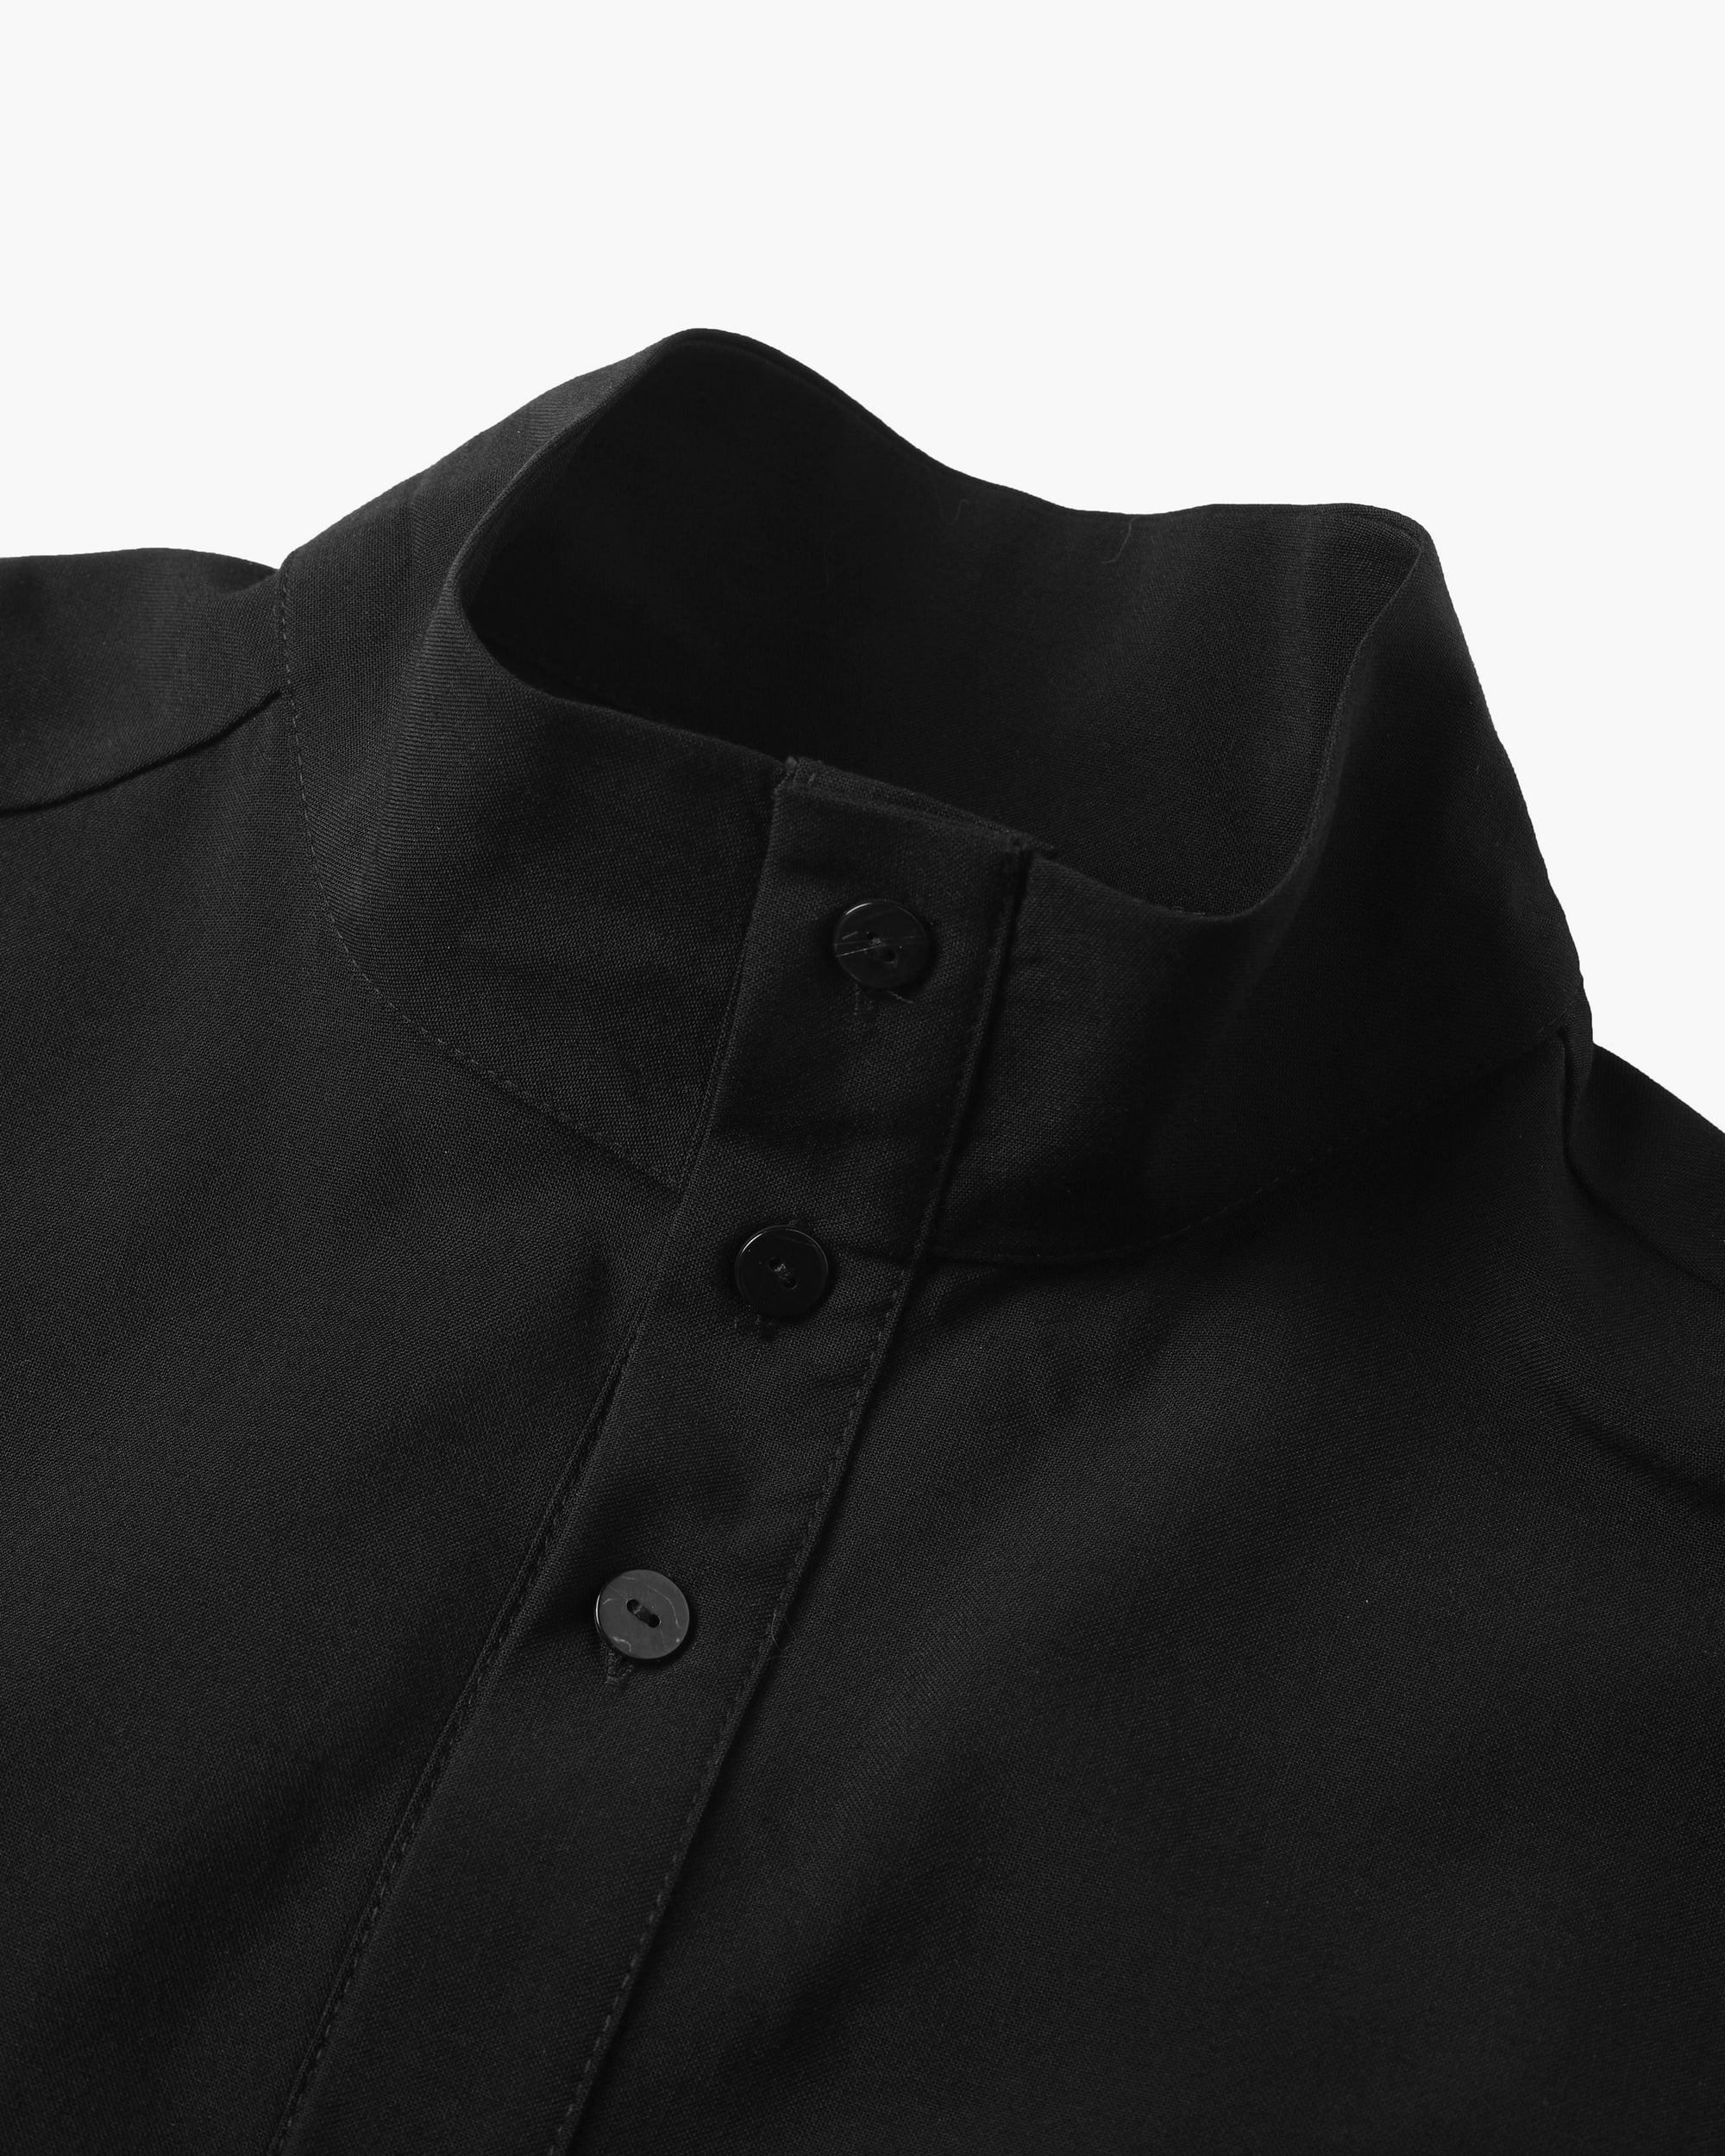 ROSEN Planck Shirt in Ultra-Light Wool